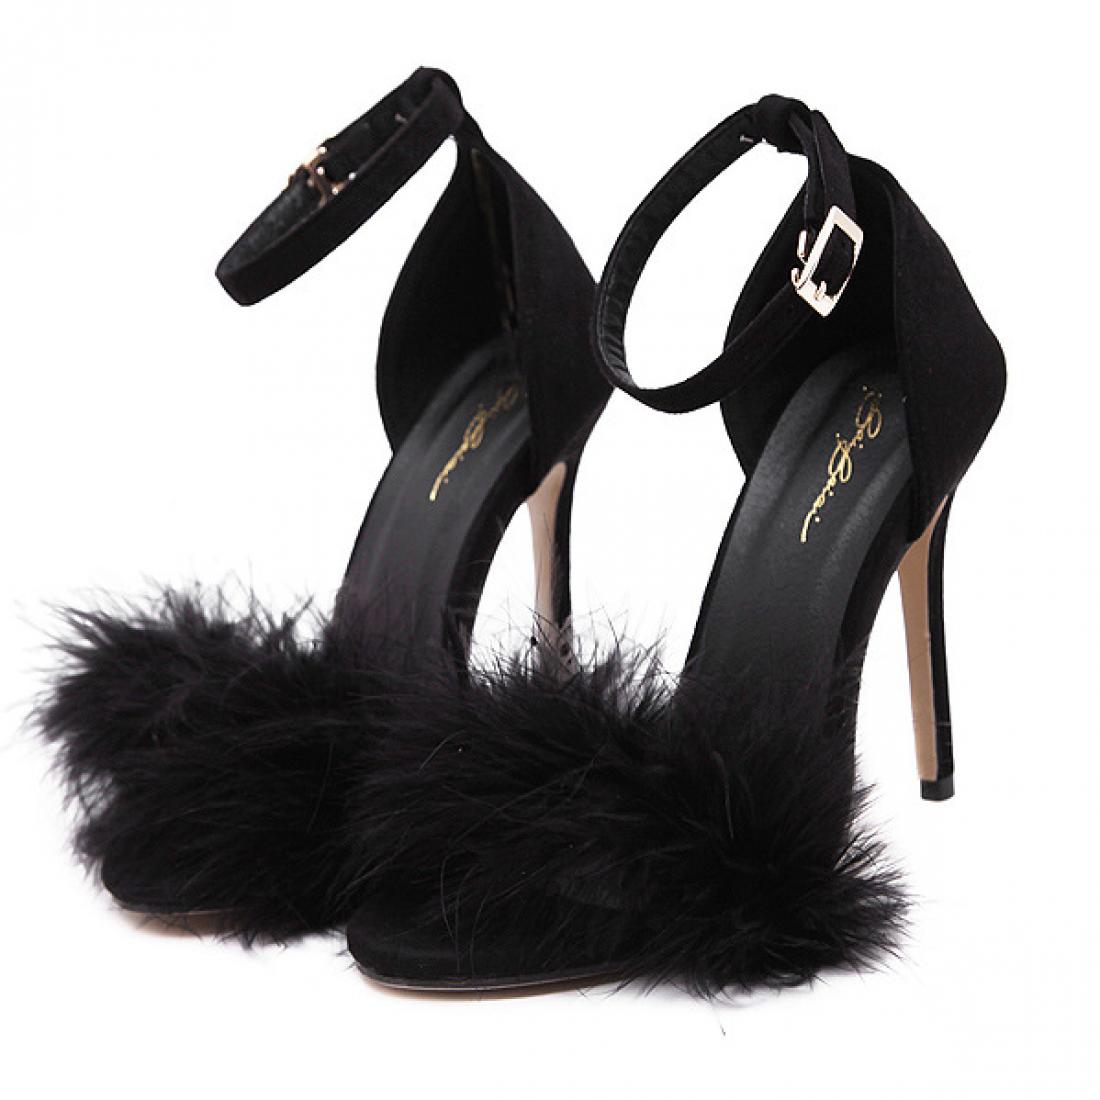 Black Suede Flurry Fur Stiletto High Heels Gown Sandals Shoes ...